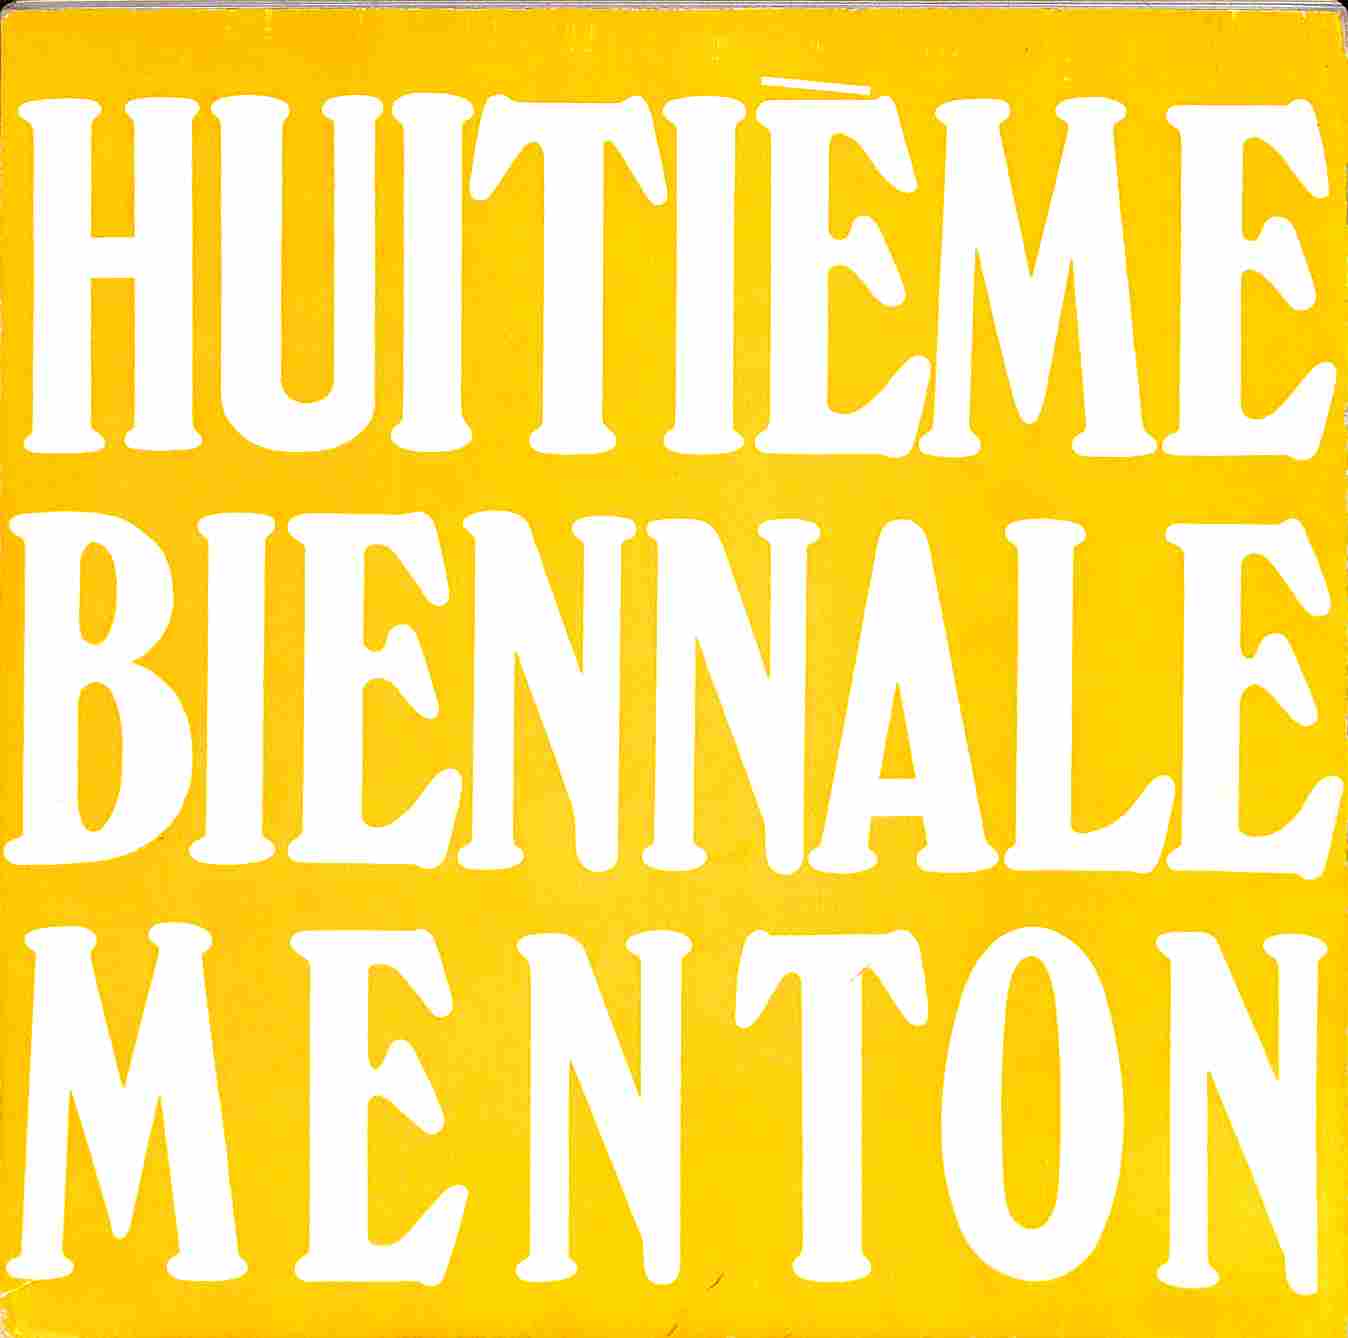 Huitième Biennale Internationale de Menton